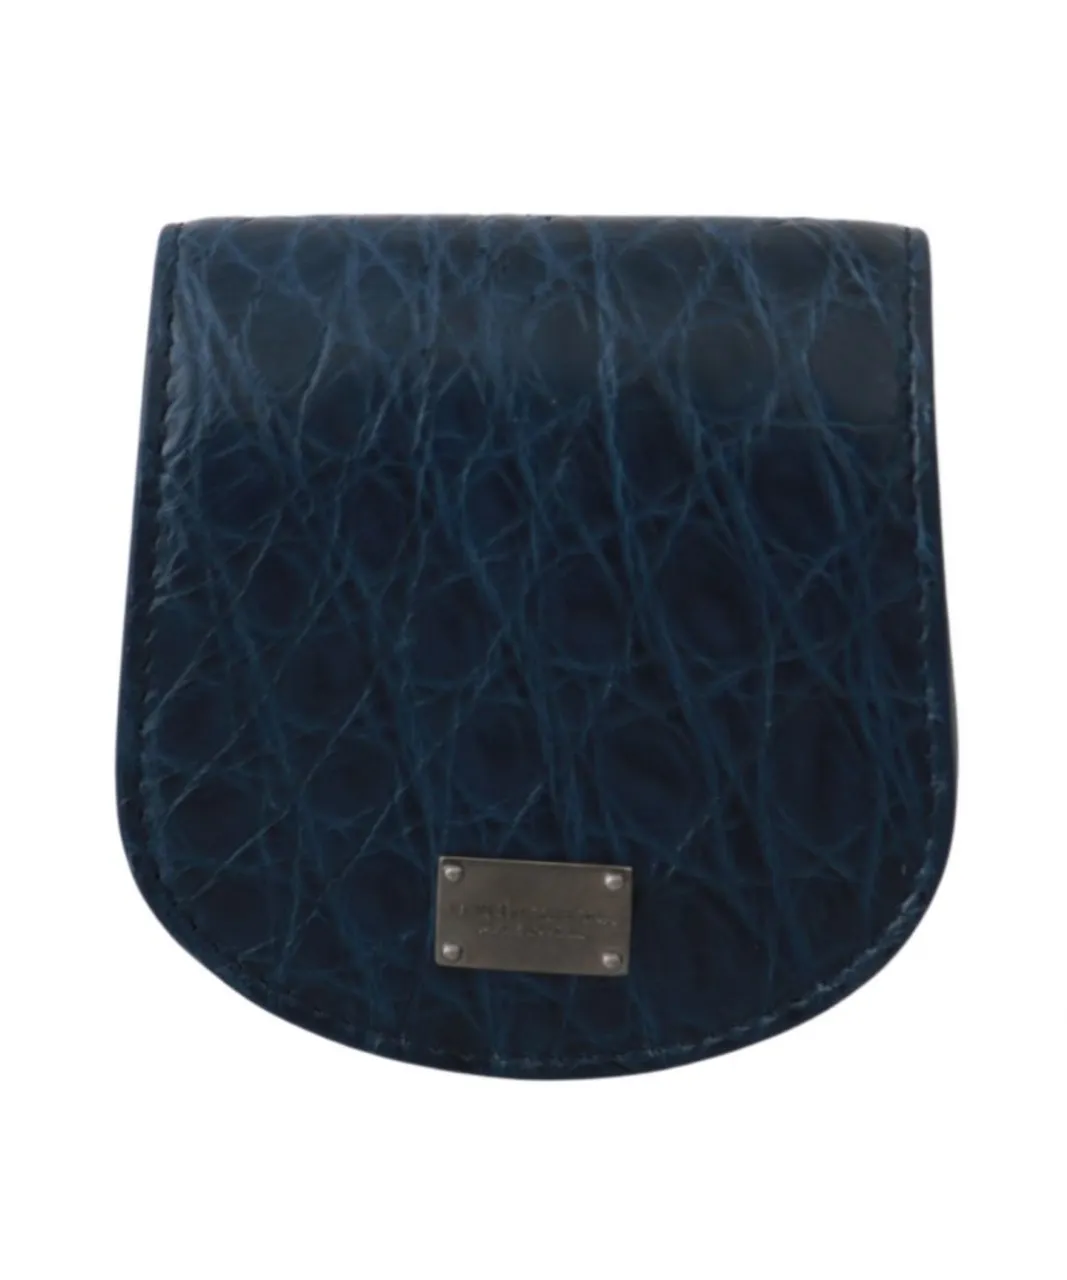 Dolce & Gabbana Mens Blue Holder Pocket Wallet Exotic Skin Condom Case - Multicolour Leather - One Size